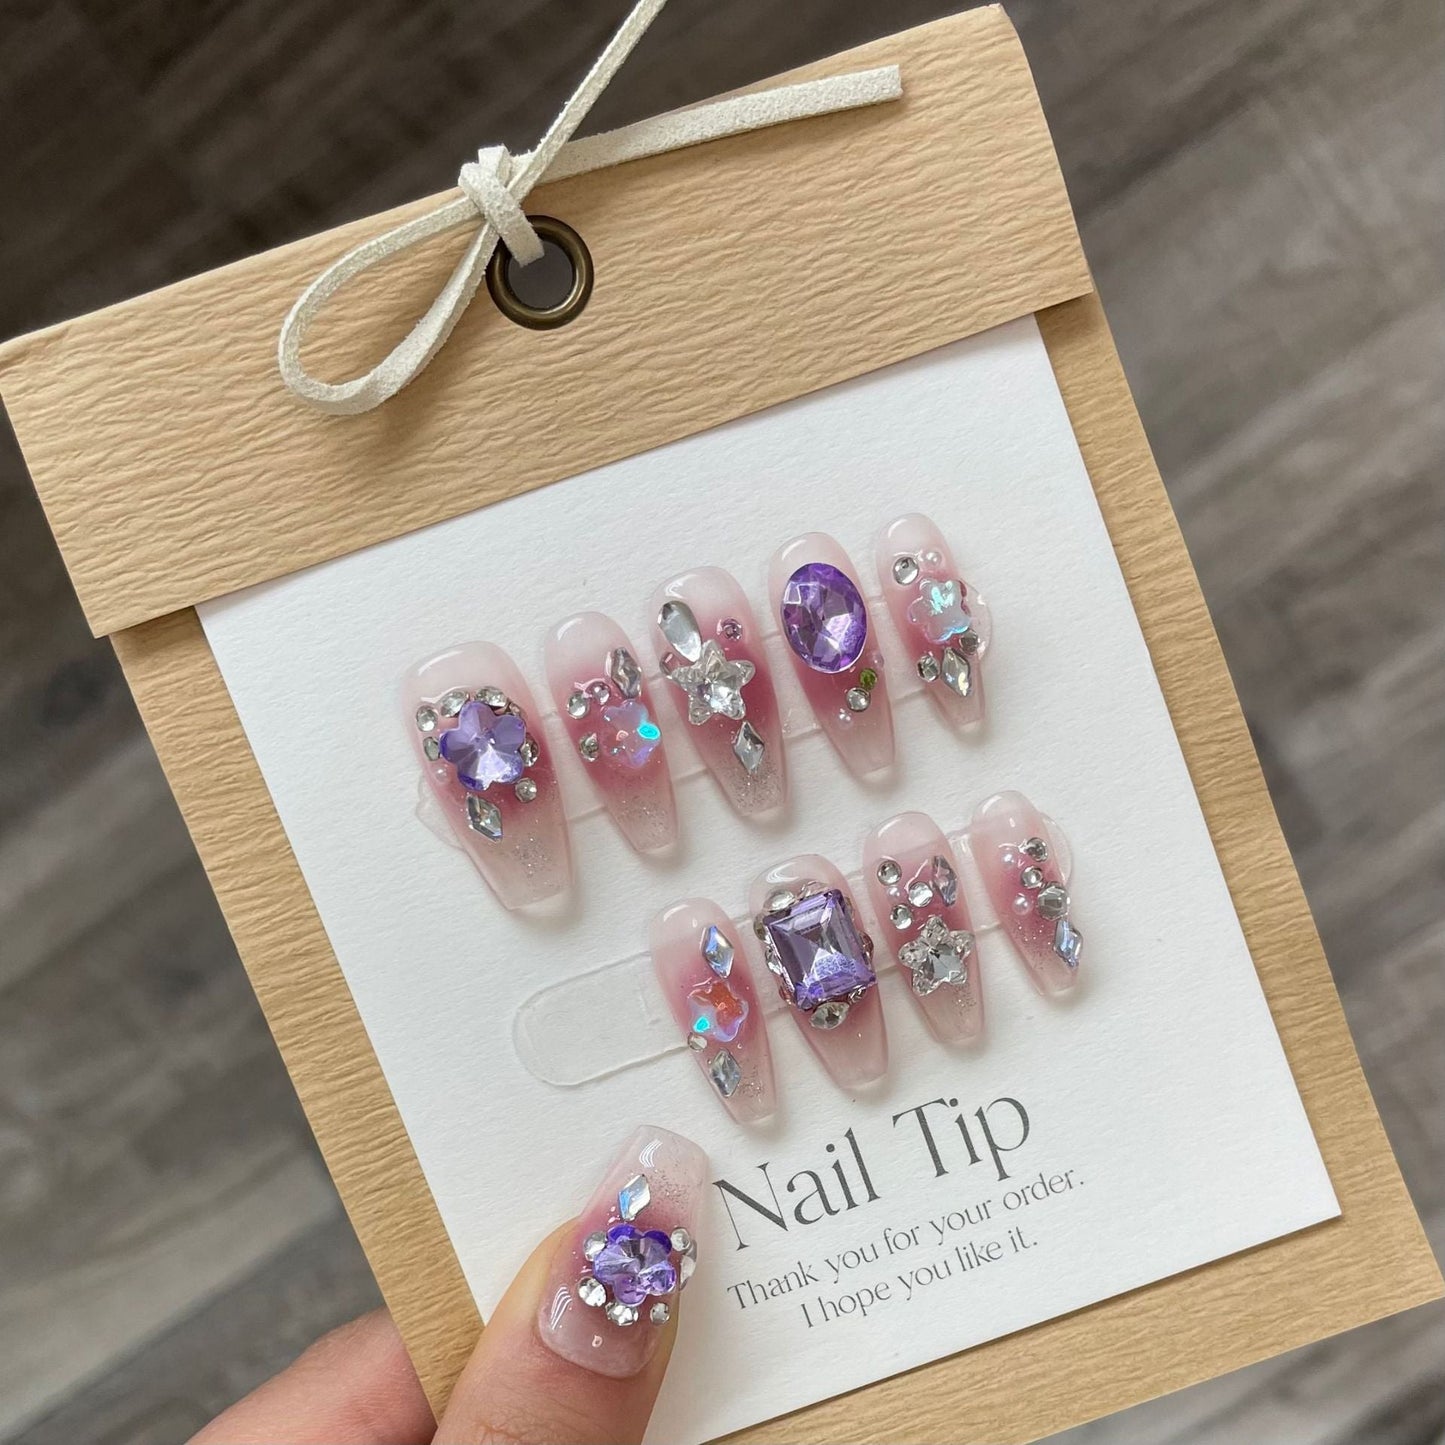 839 Rhinestone style press on nails 100% handmade false nails pink